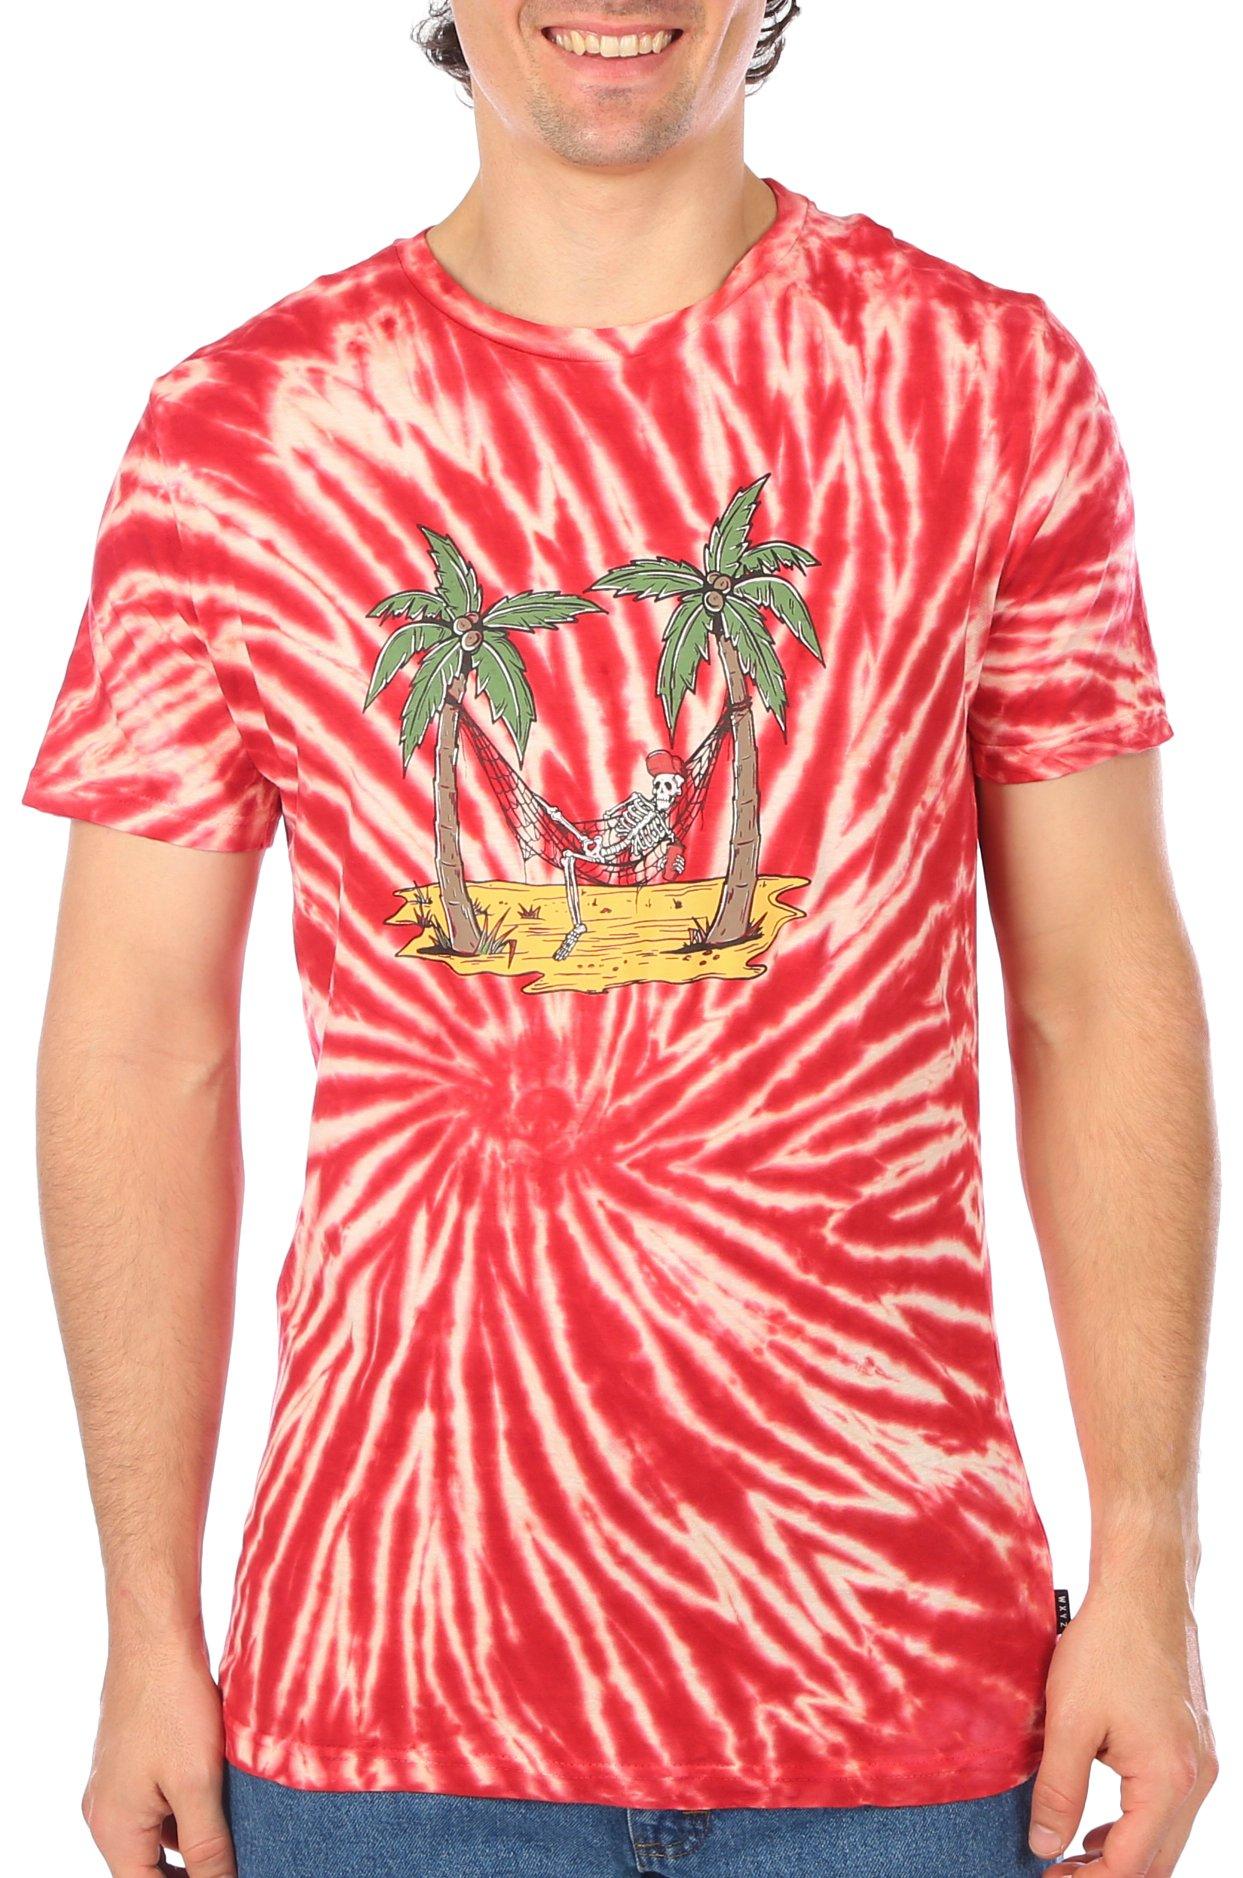 WXYZ Mens Tropical Skeleton Short Sleeve T-Shirt